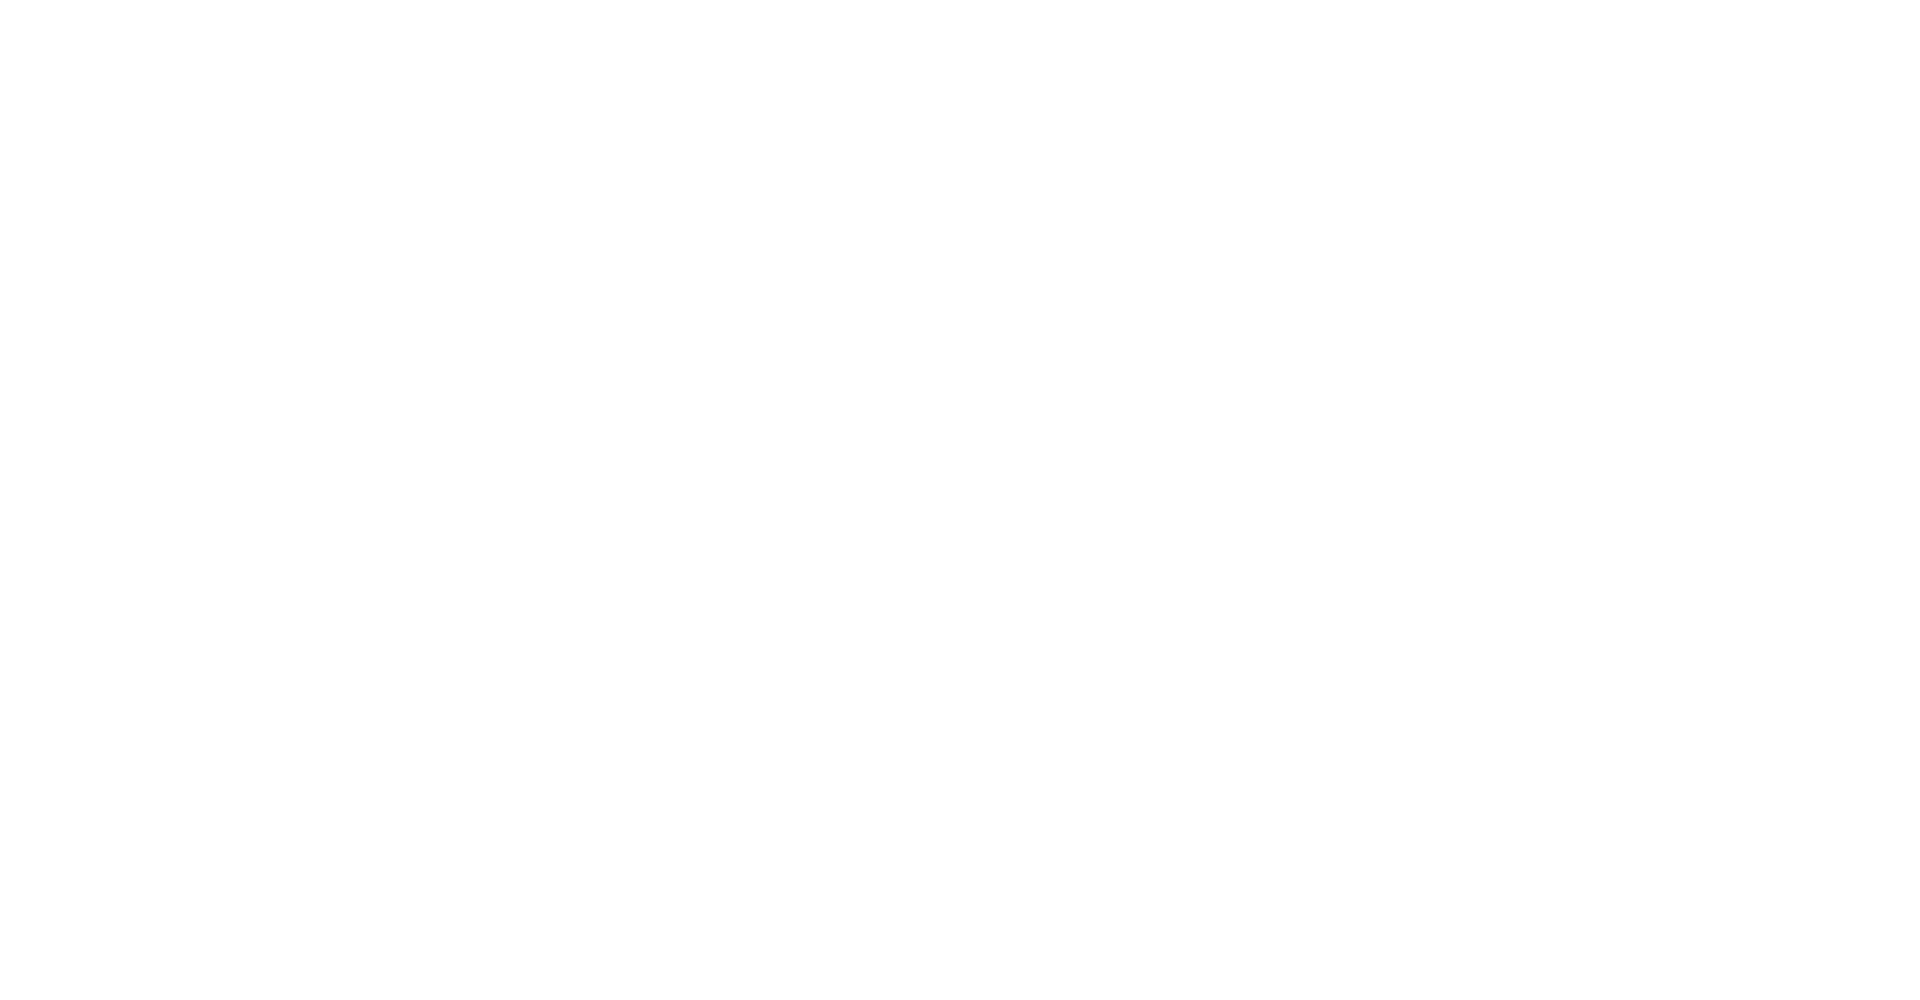 SOUTH SHORE PILE DRIVING